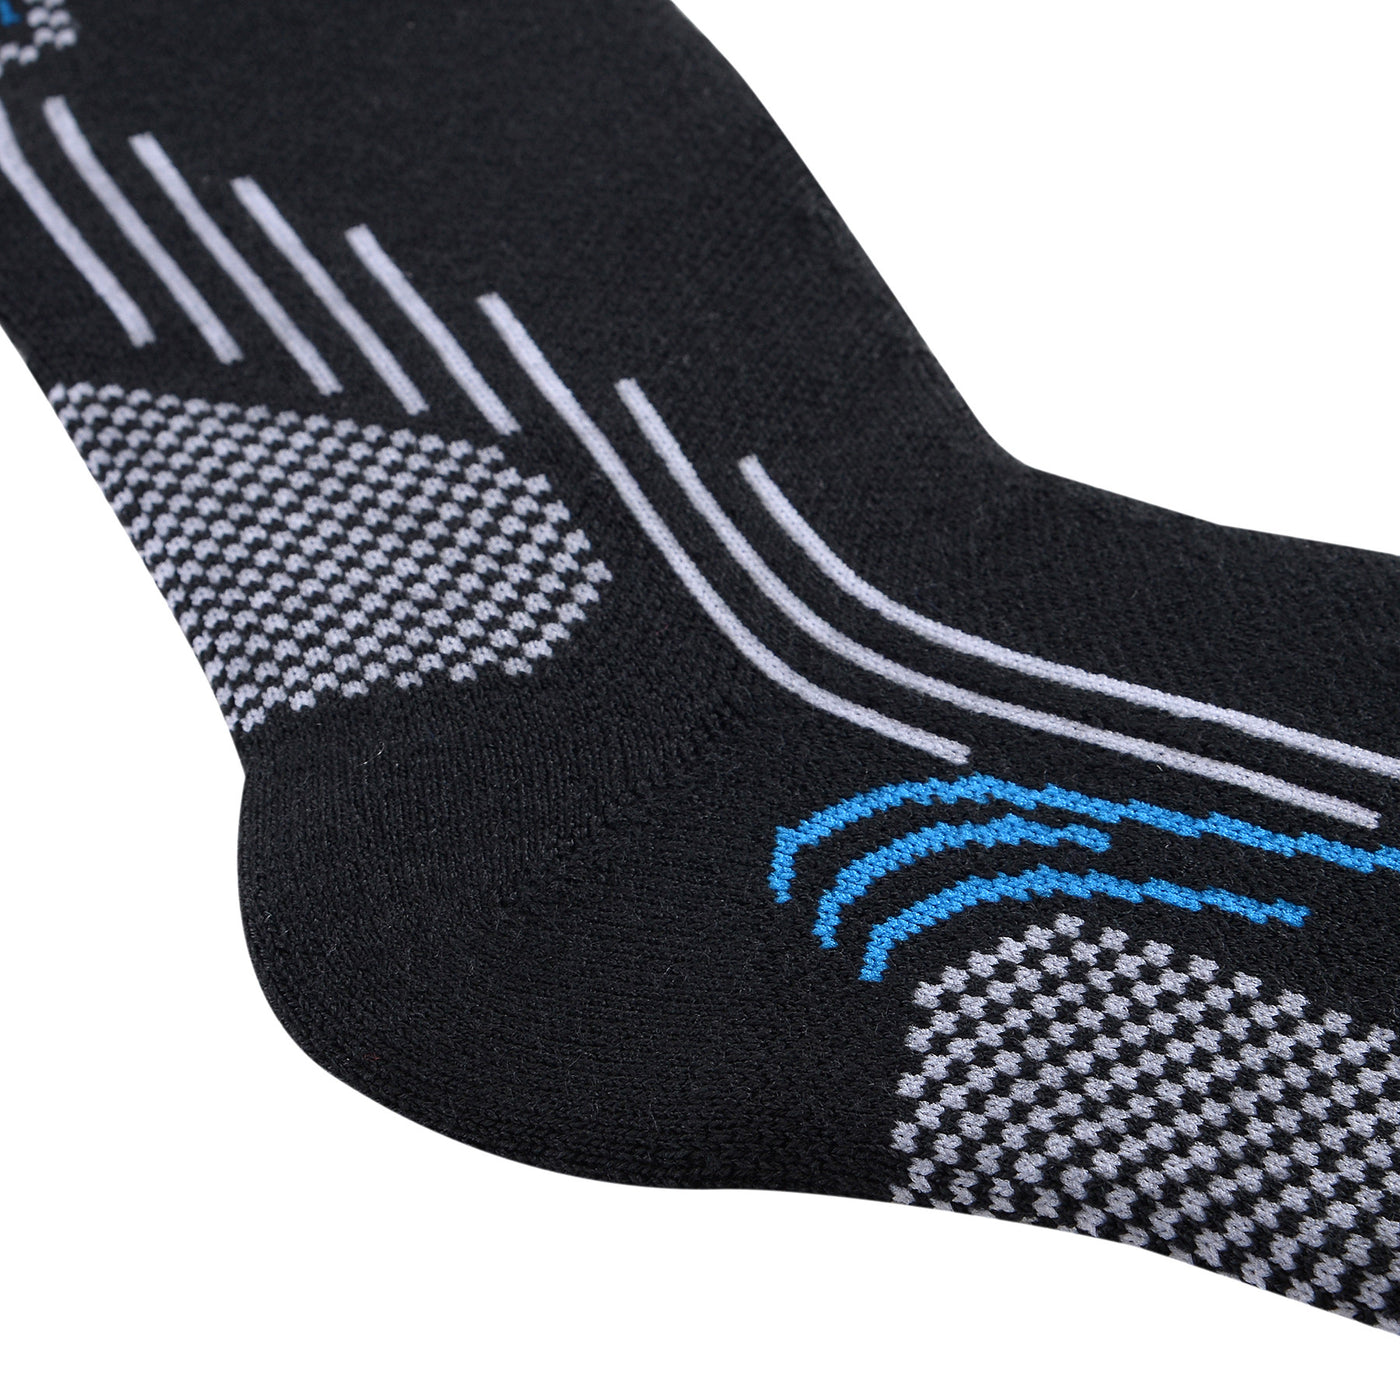 Laulax 2 Pairs High Quality Merino Wool Men's Ski Socks, Size UK 7 - 11 / Europe 40 - 46, Gift Set, Black, Burgundy